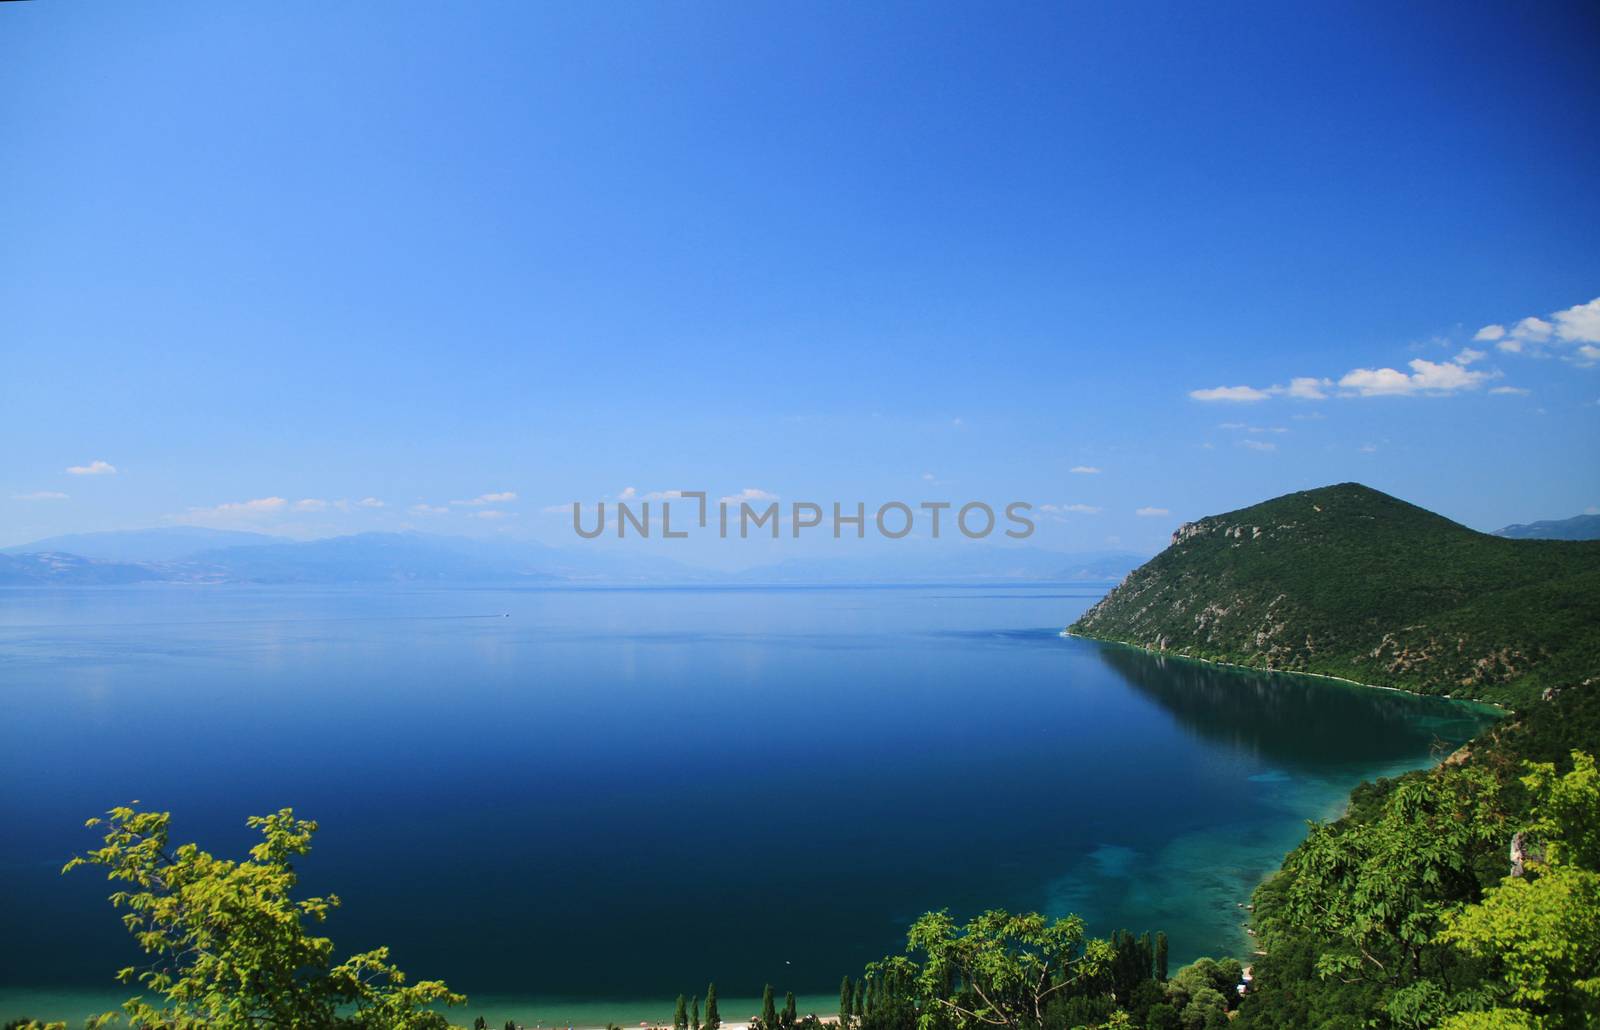 Like Ohrid landscape, pearl of Macedonia